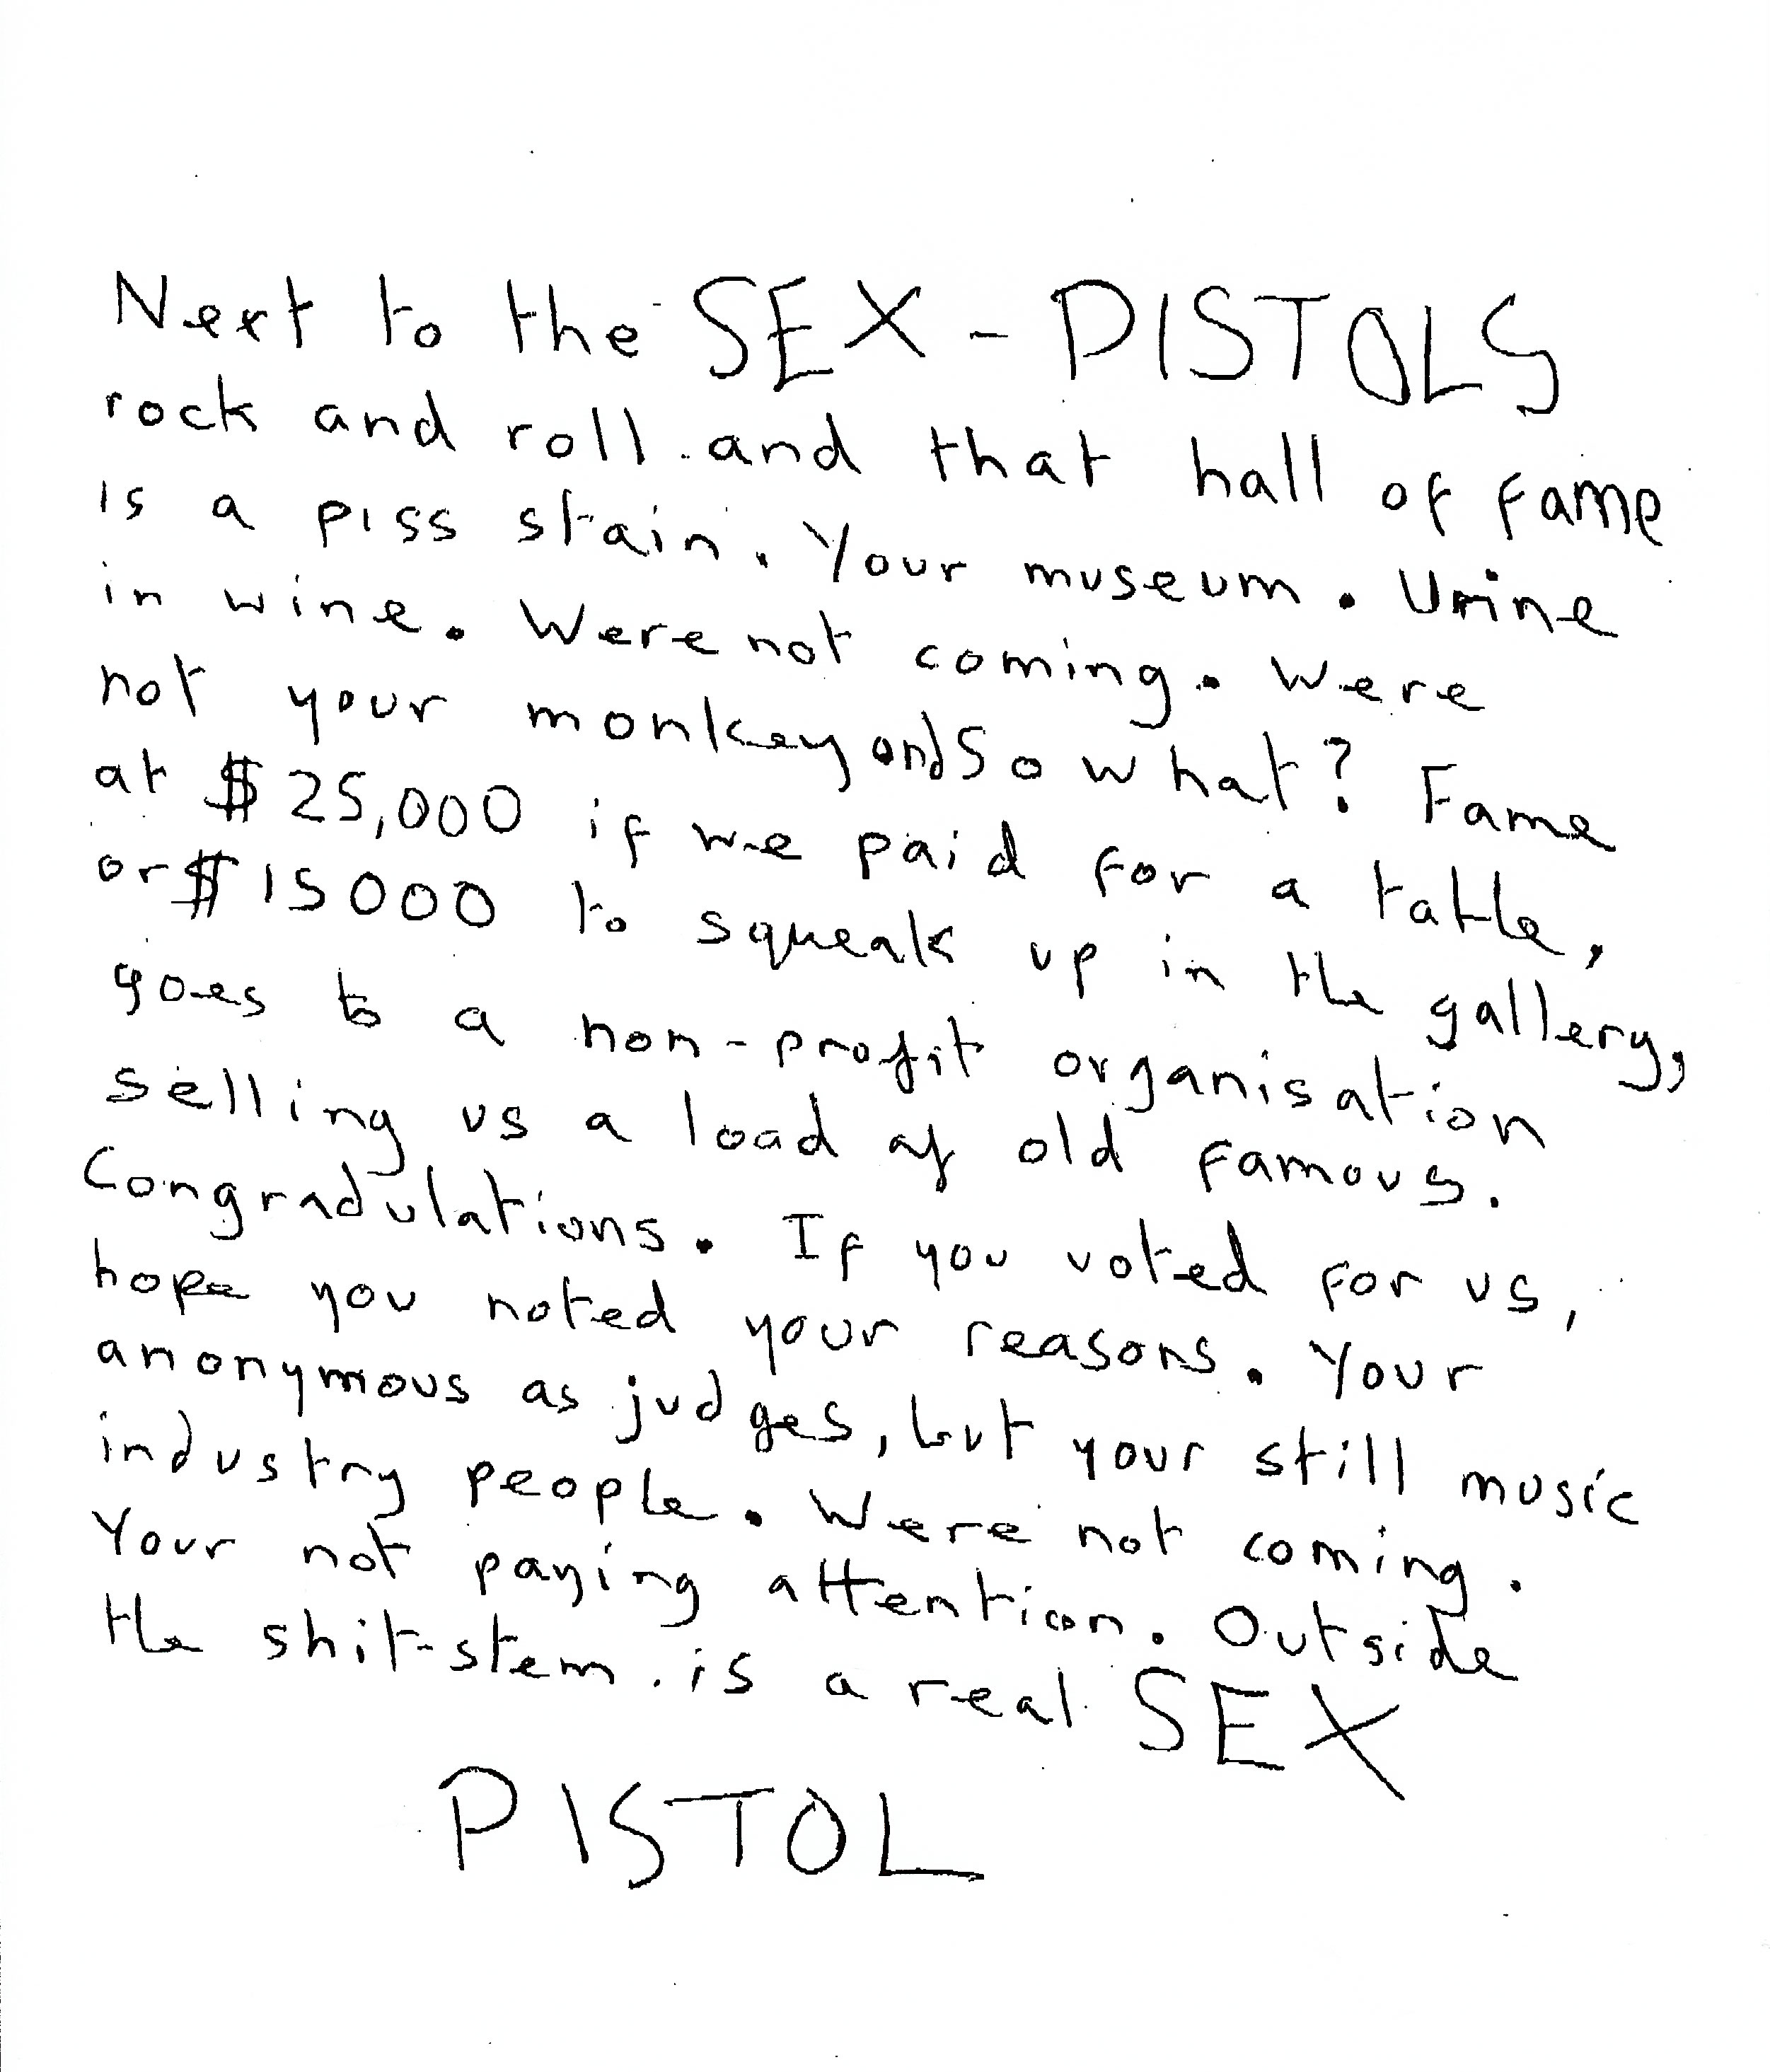 Lyrics to the sex pistols